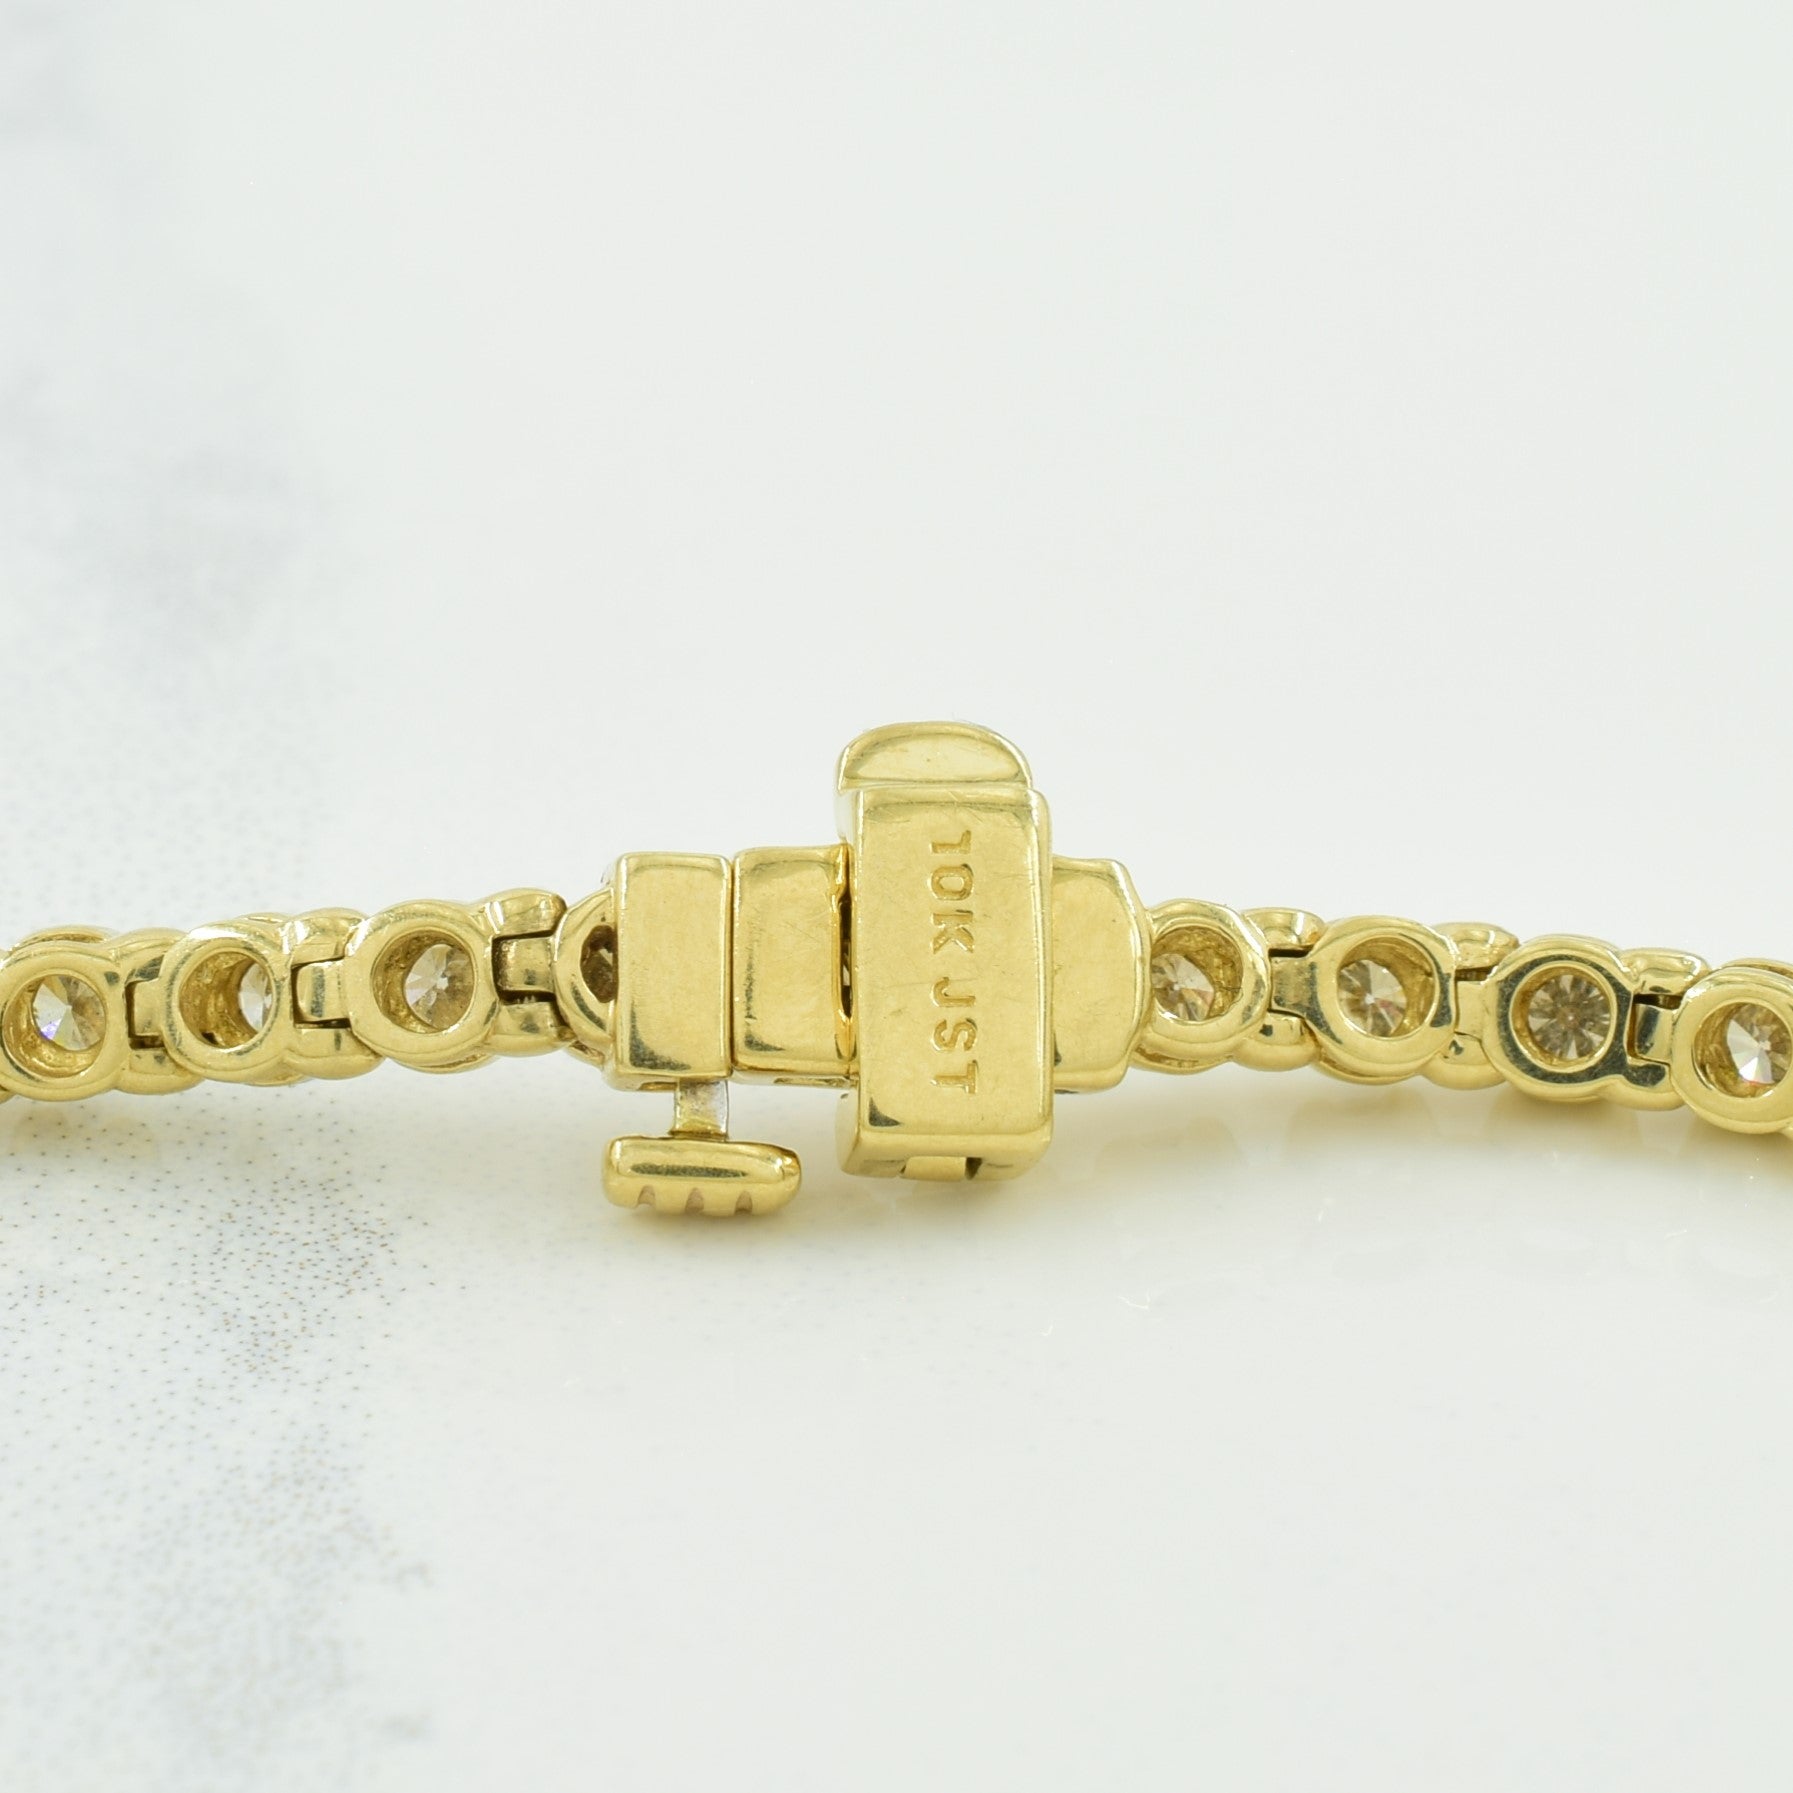 10k Yellow Gold Diamond Tennis Bracelet | 2.08ctw | 7